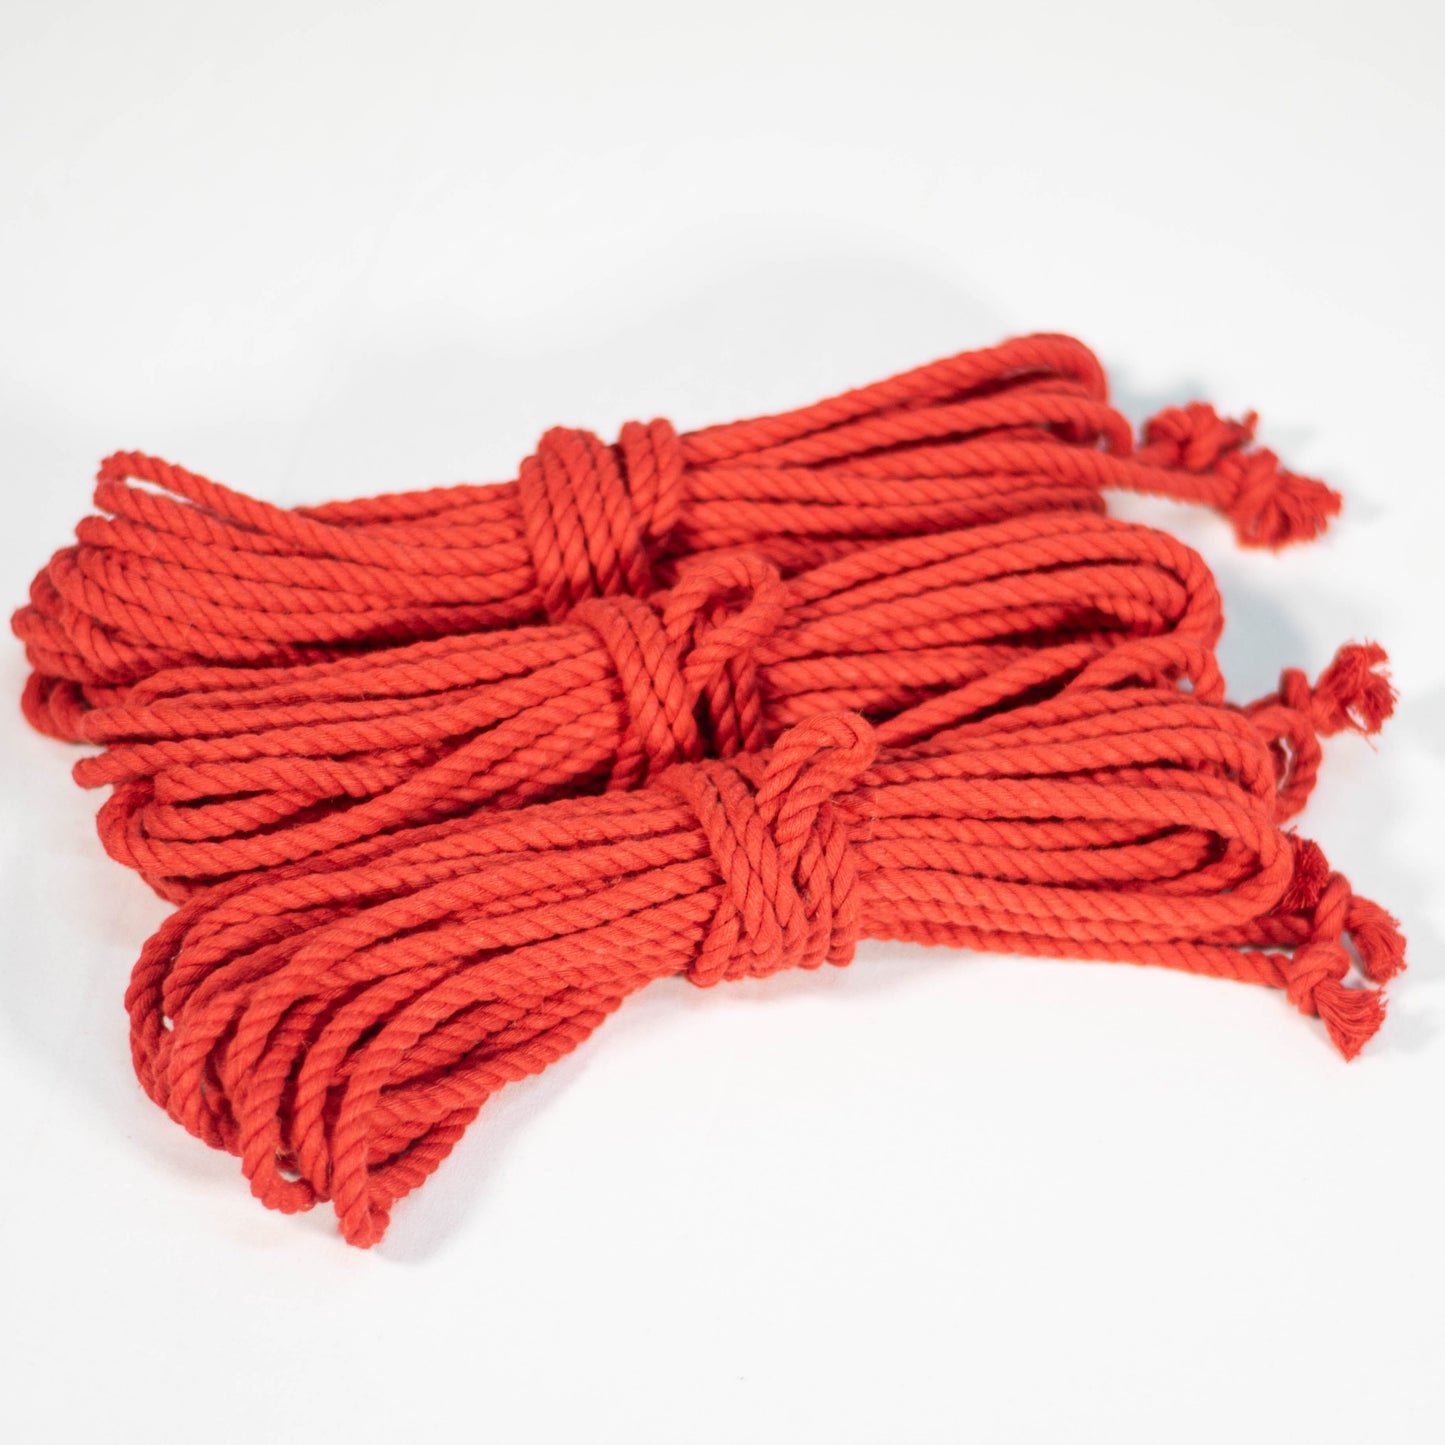 Cotton Play Ropes Shibari Rope red Bundle of 3 